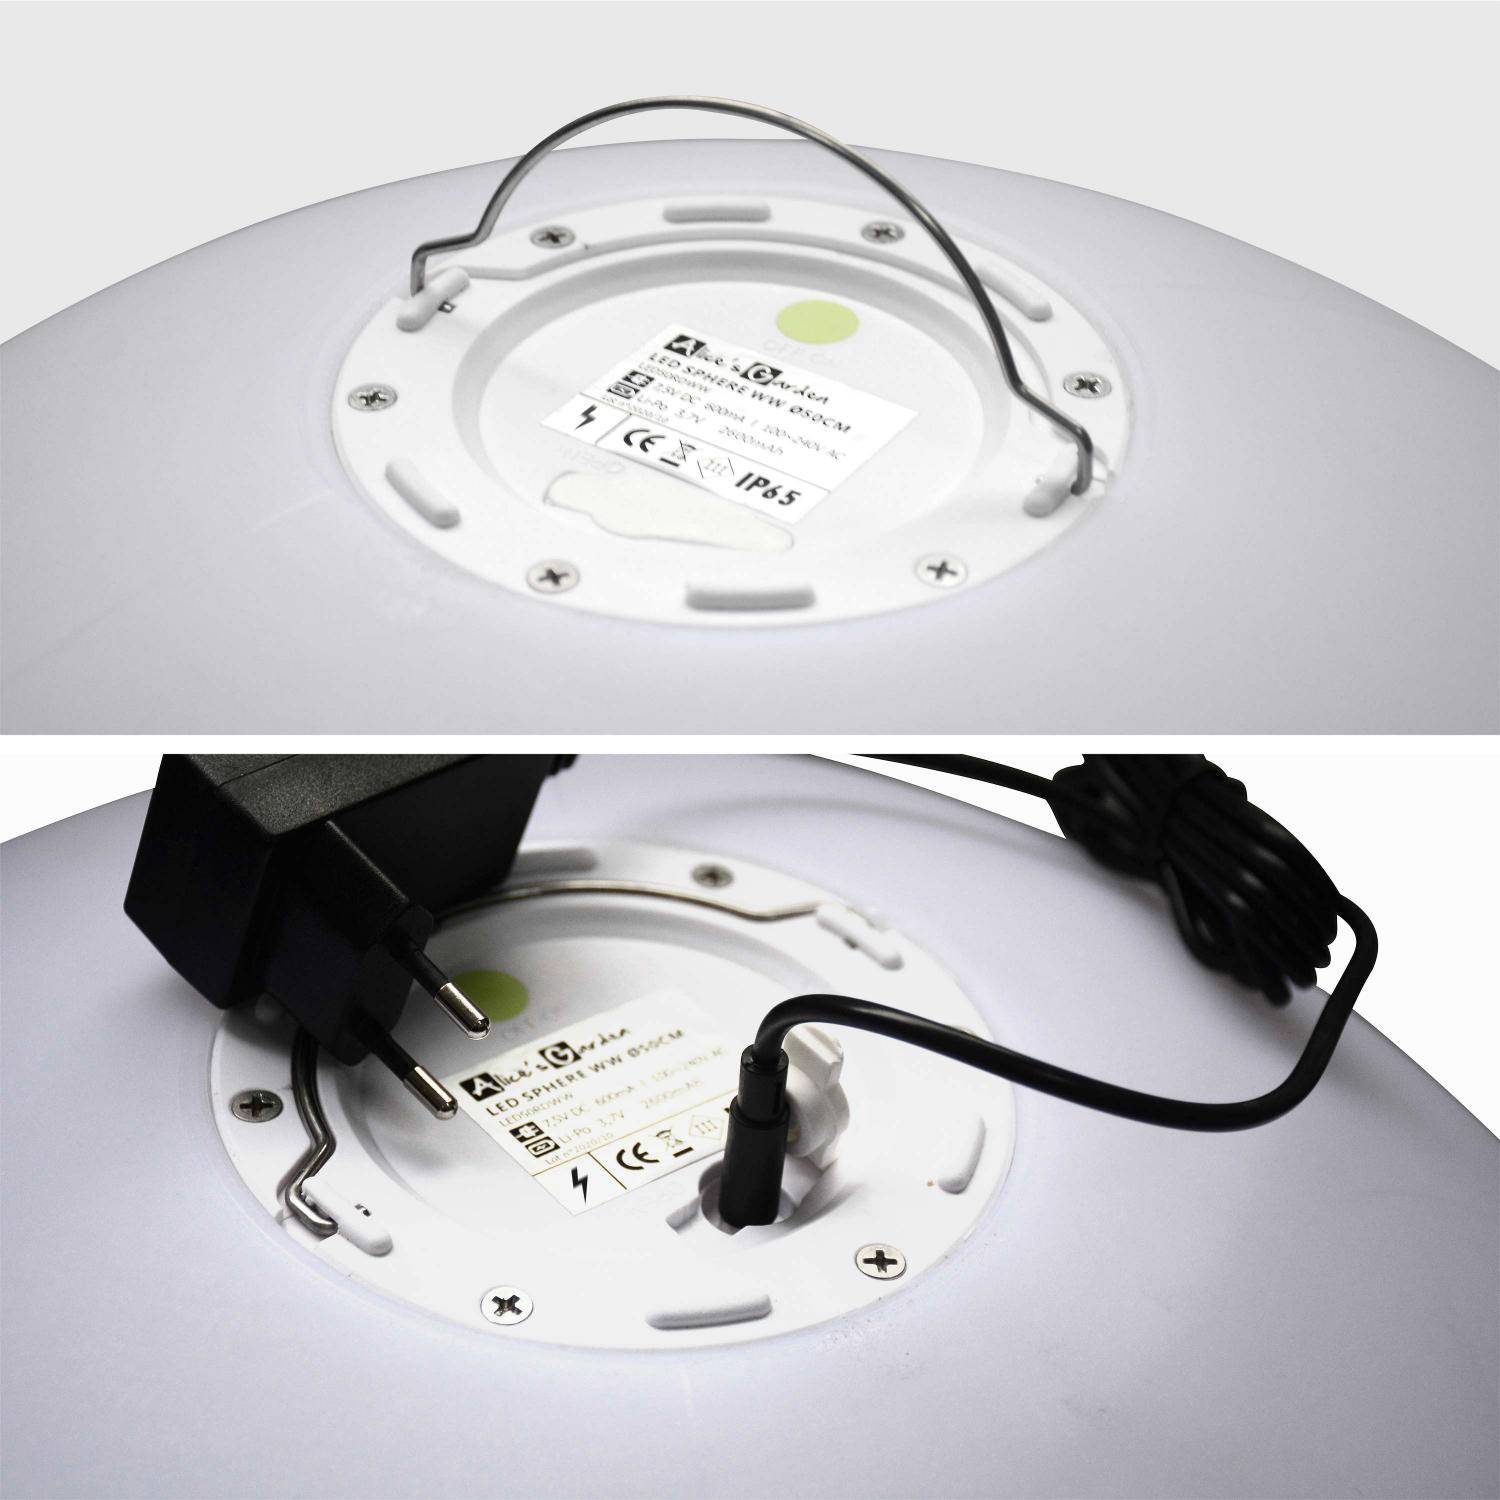 50cm spherical LED lamp – Decorative light sphere, remote control, Warm white Photo4